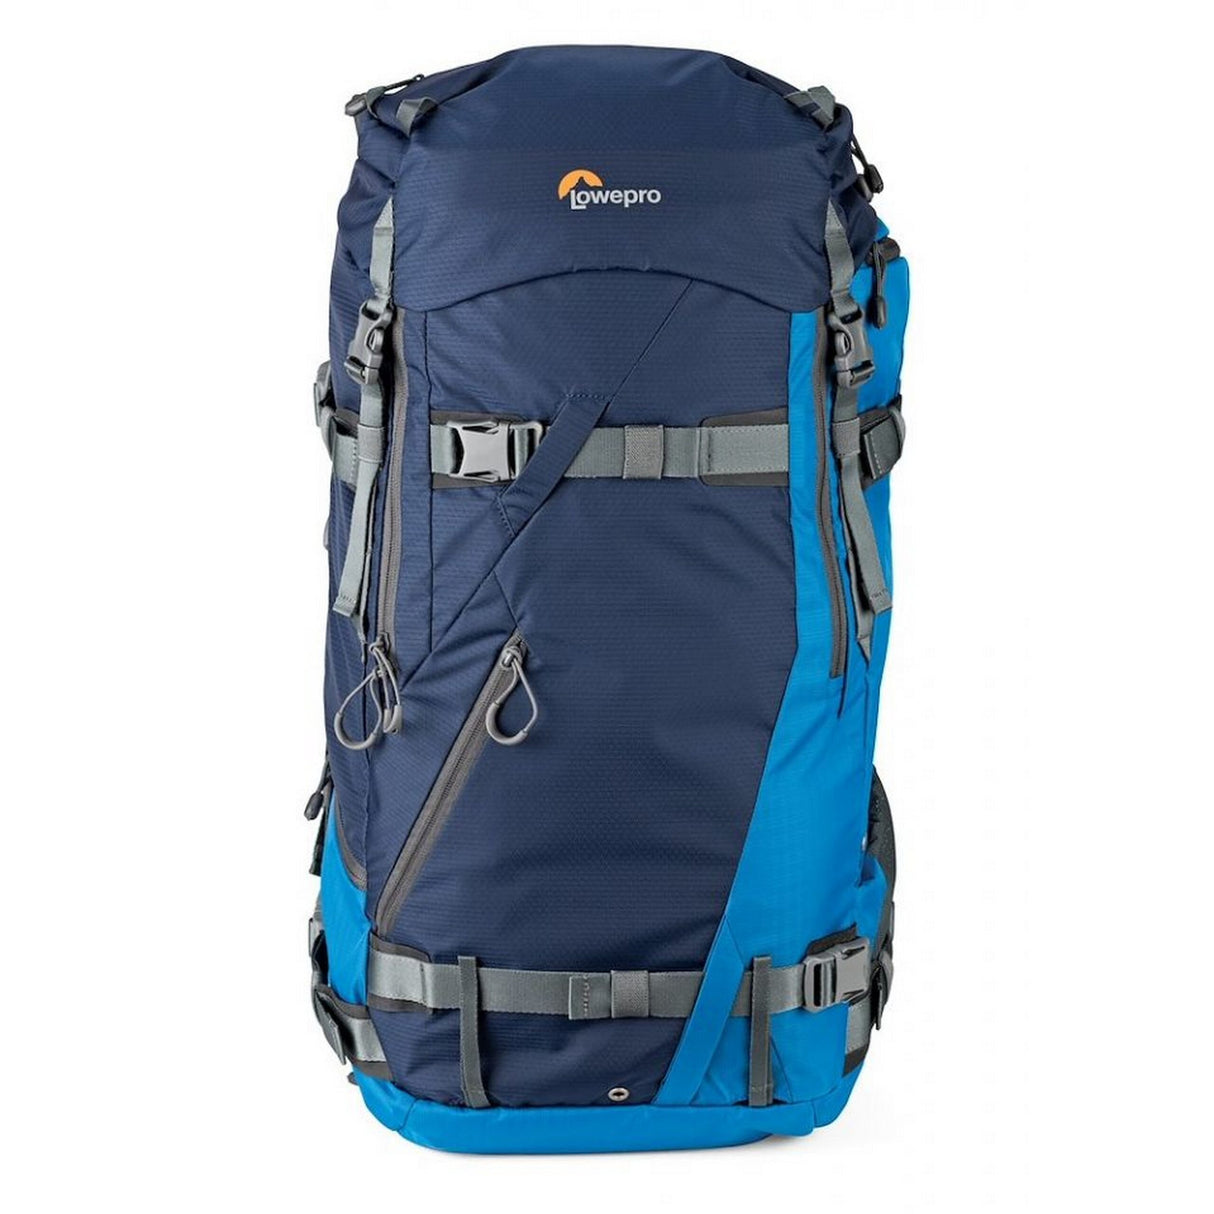 Lowepro LP37231-PWW Powder Backpack 500 AW, Midnight Blue/Horizon Blue